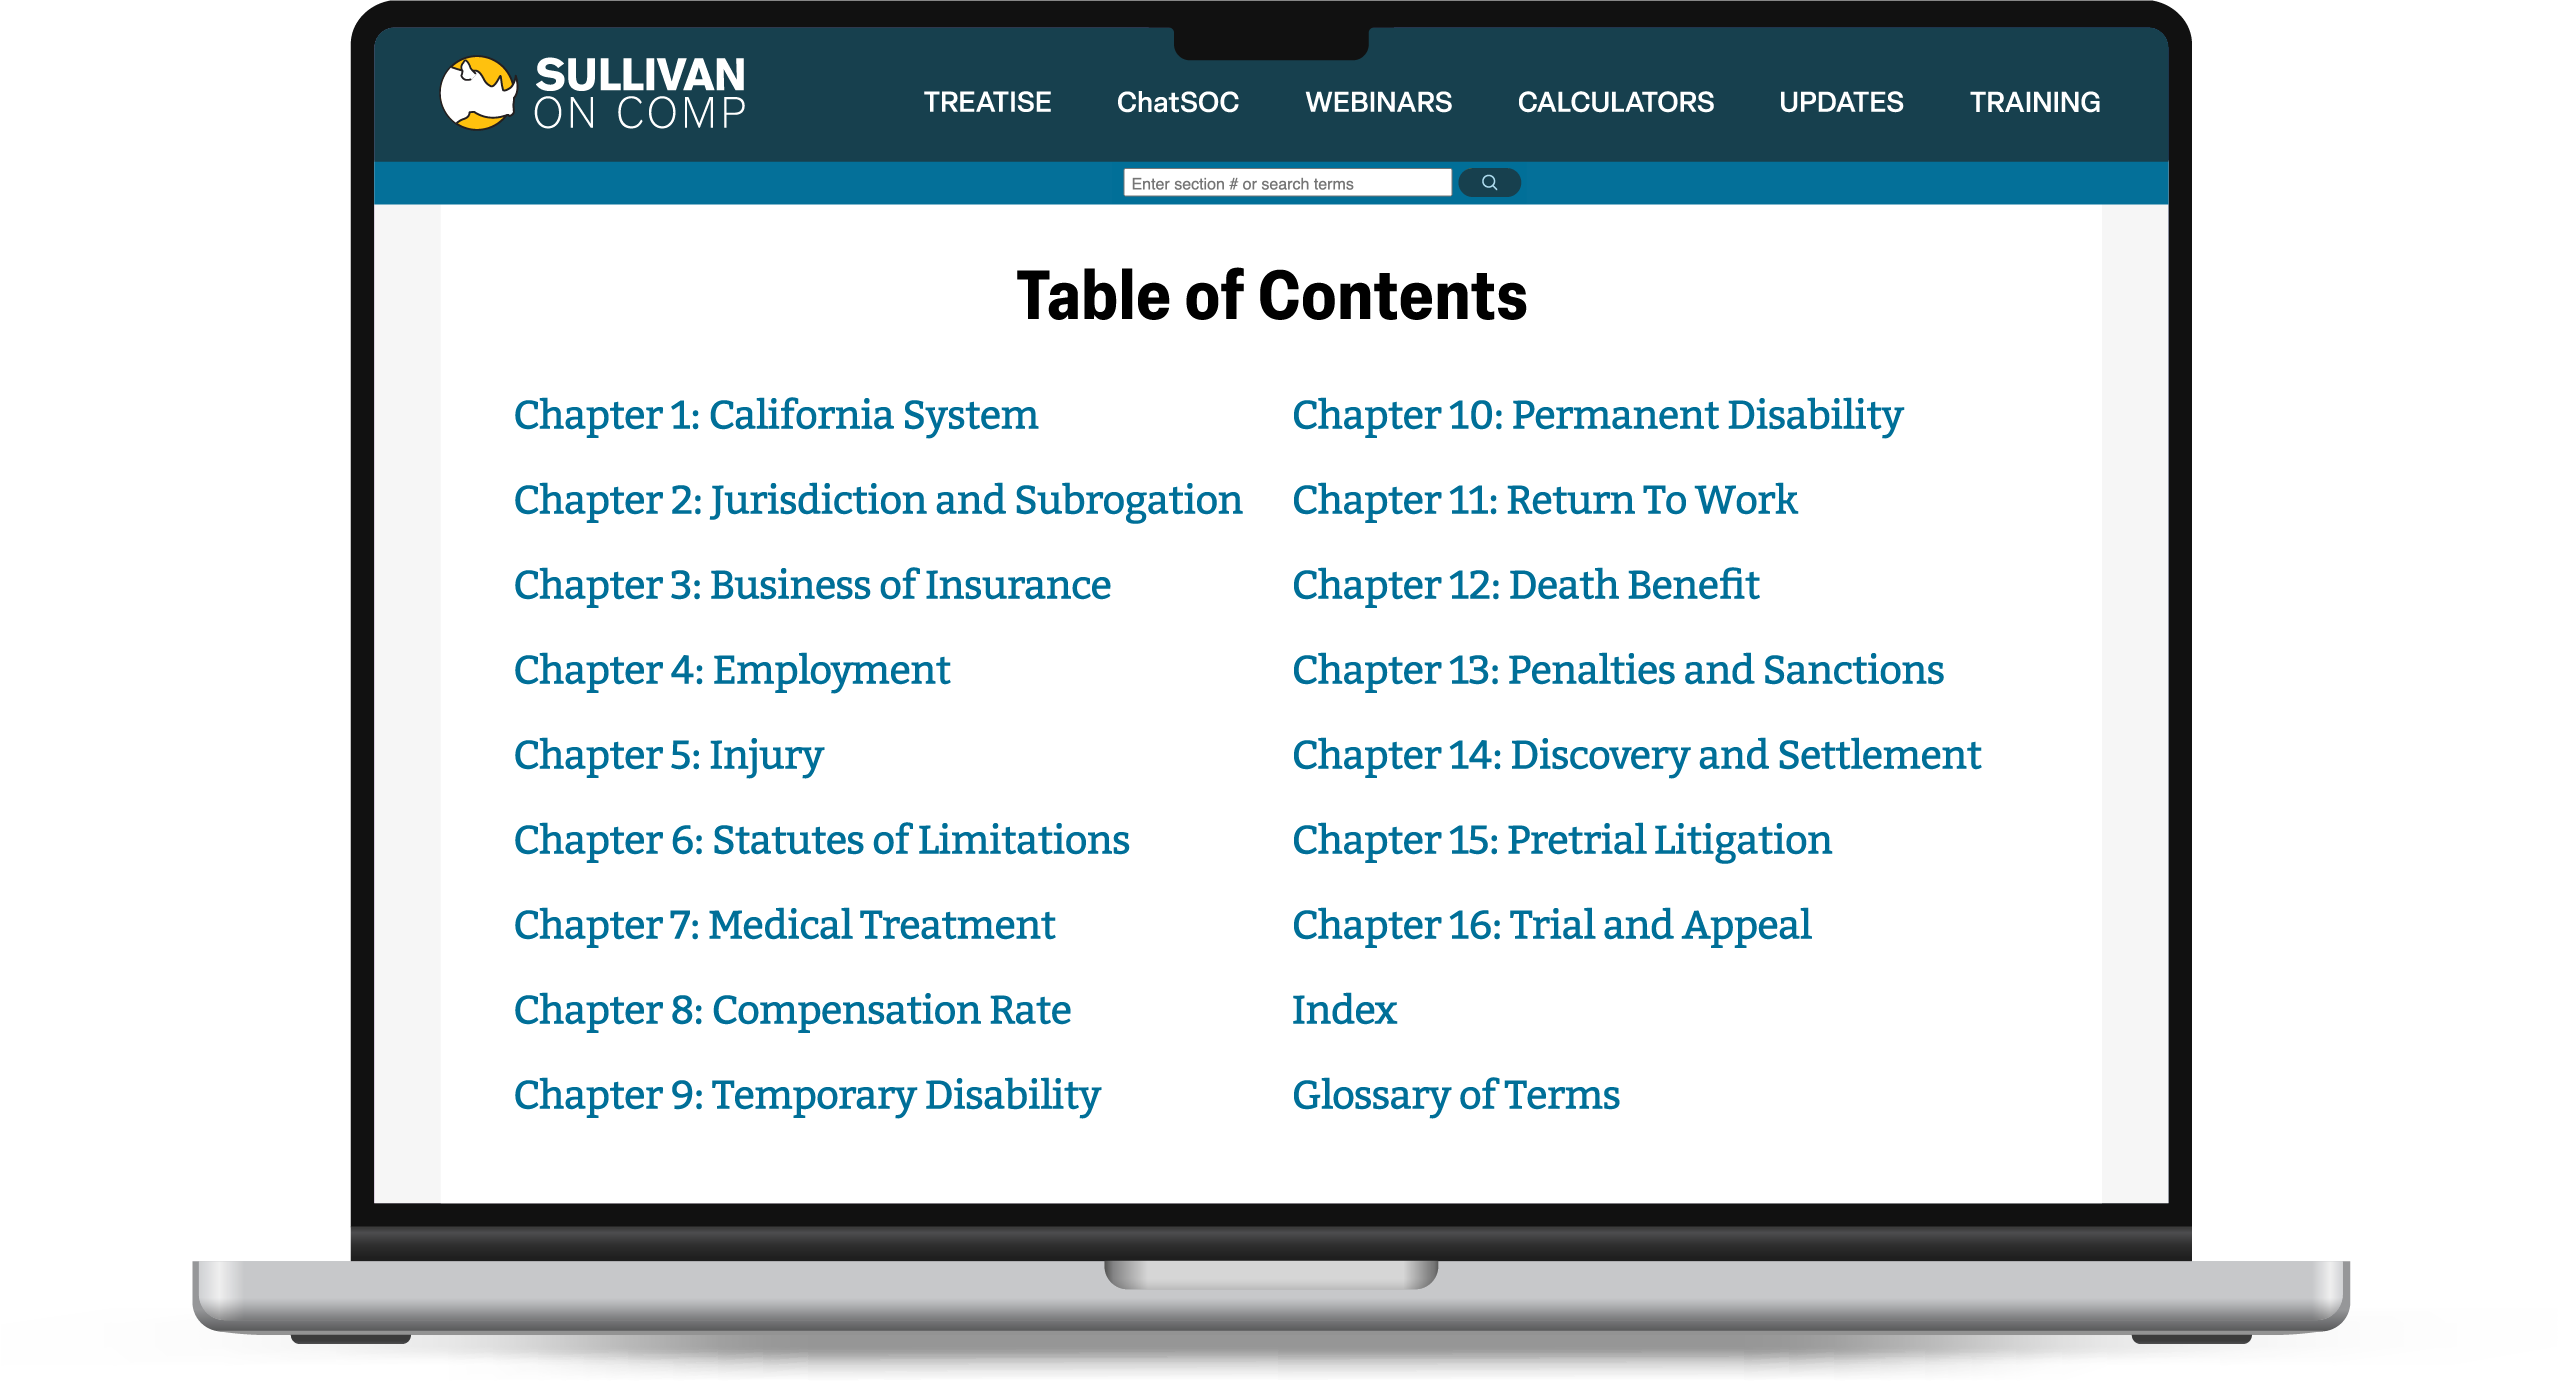 Sullivan on Comp: For IEA WCLP program subscription